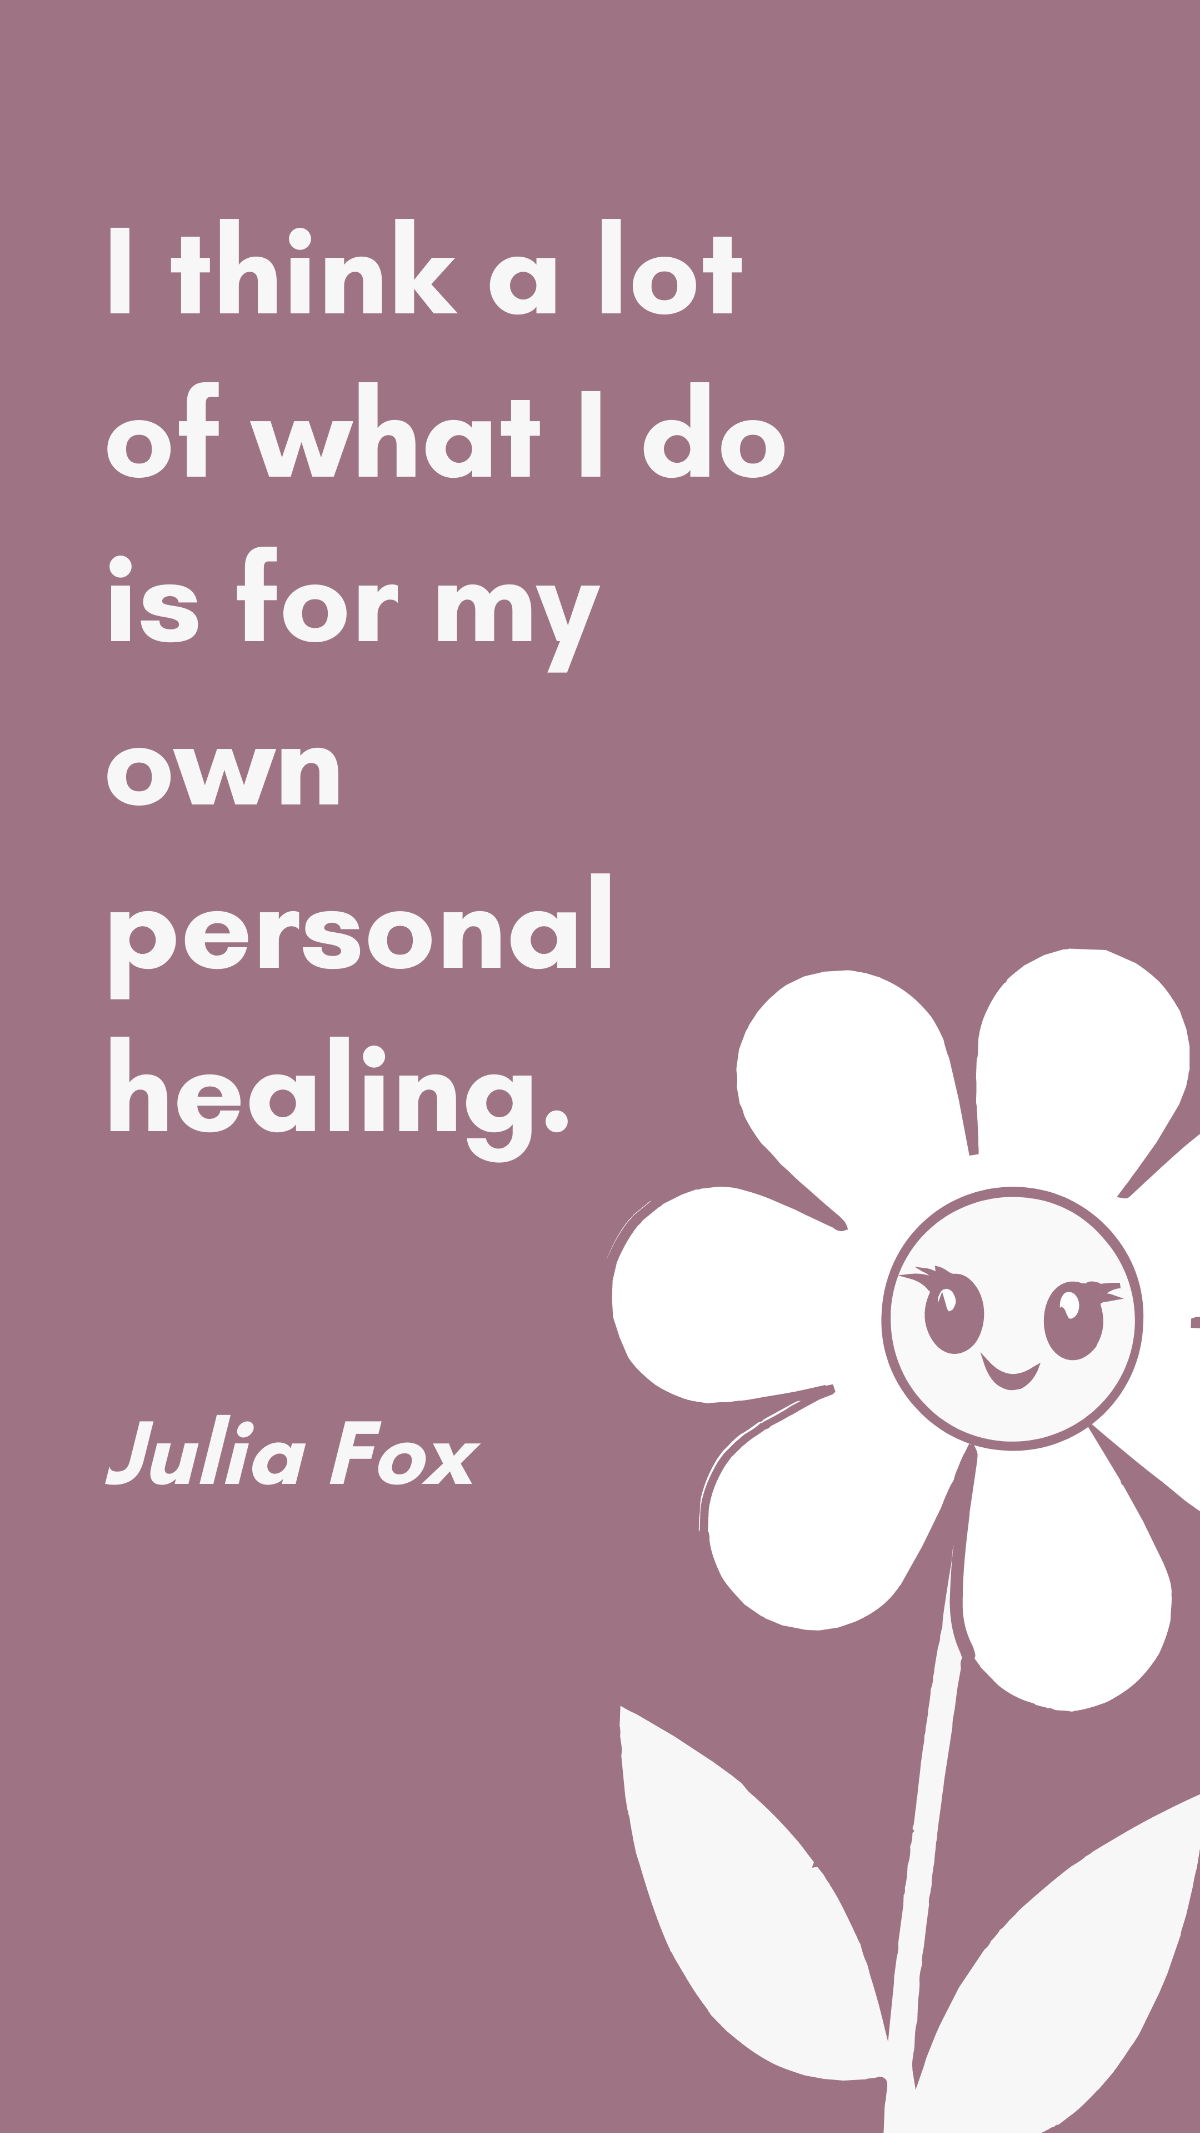 Julia Fox - I think a lot of what I do is for my own personal healing. Template